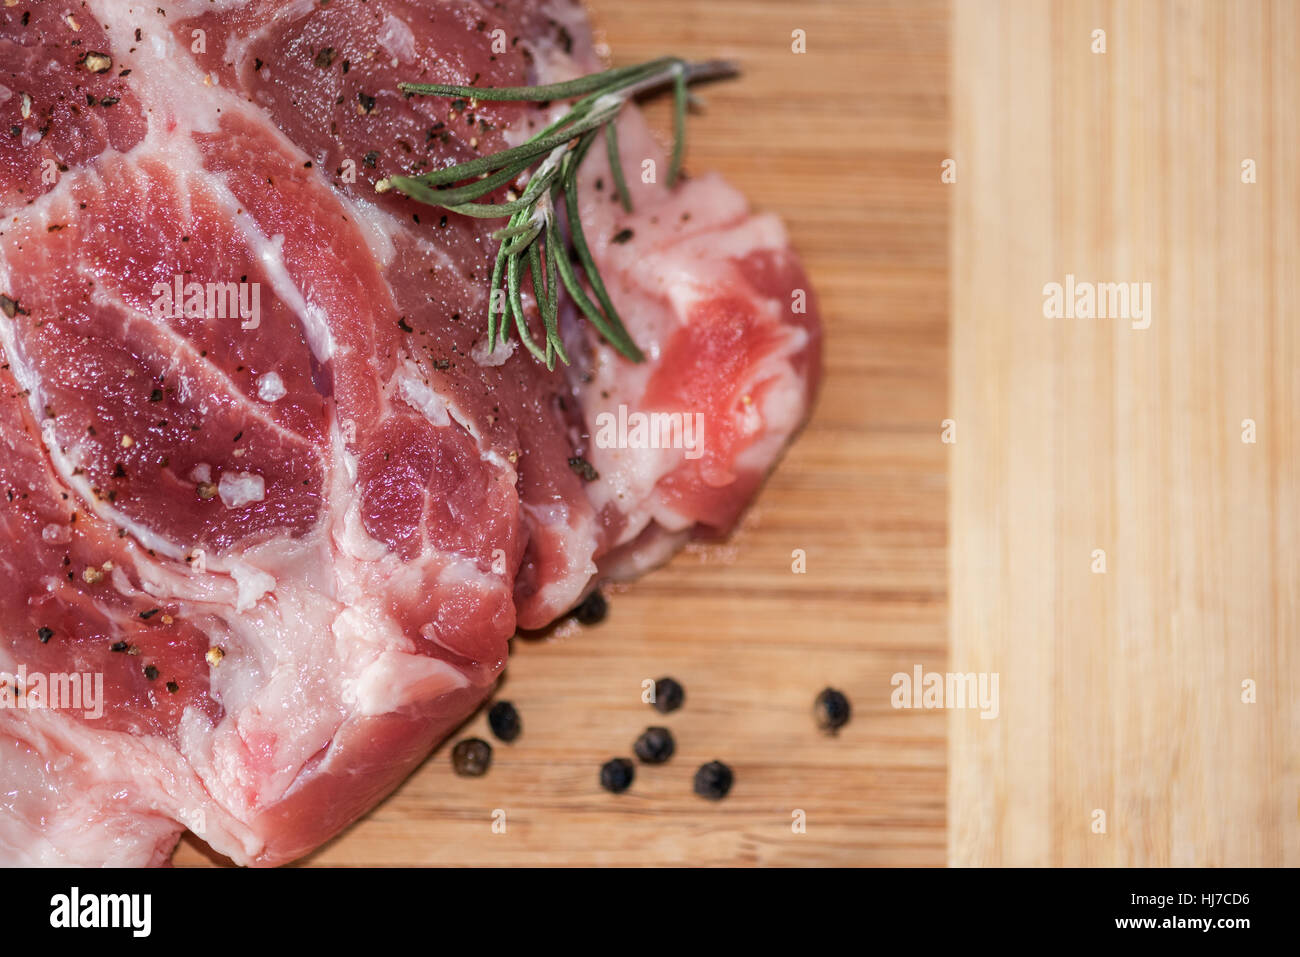 Raw pork steak on wooden board. Stock Photo